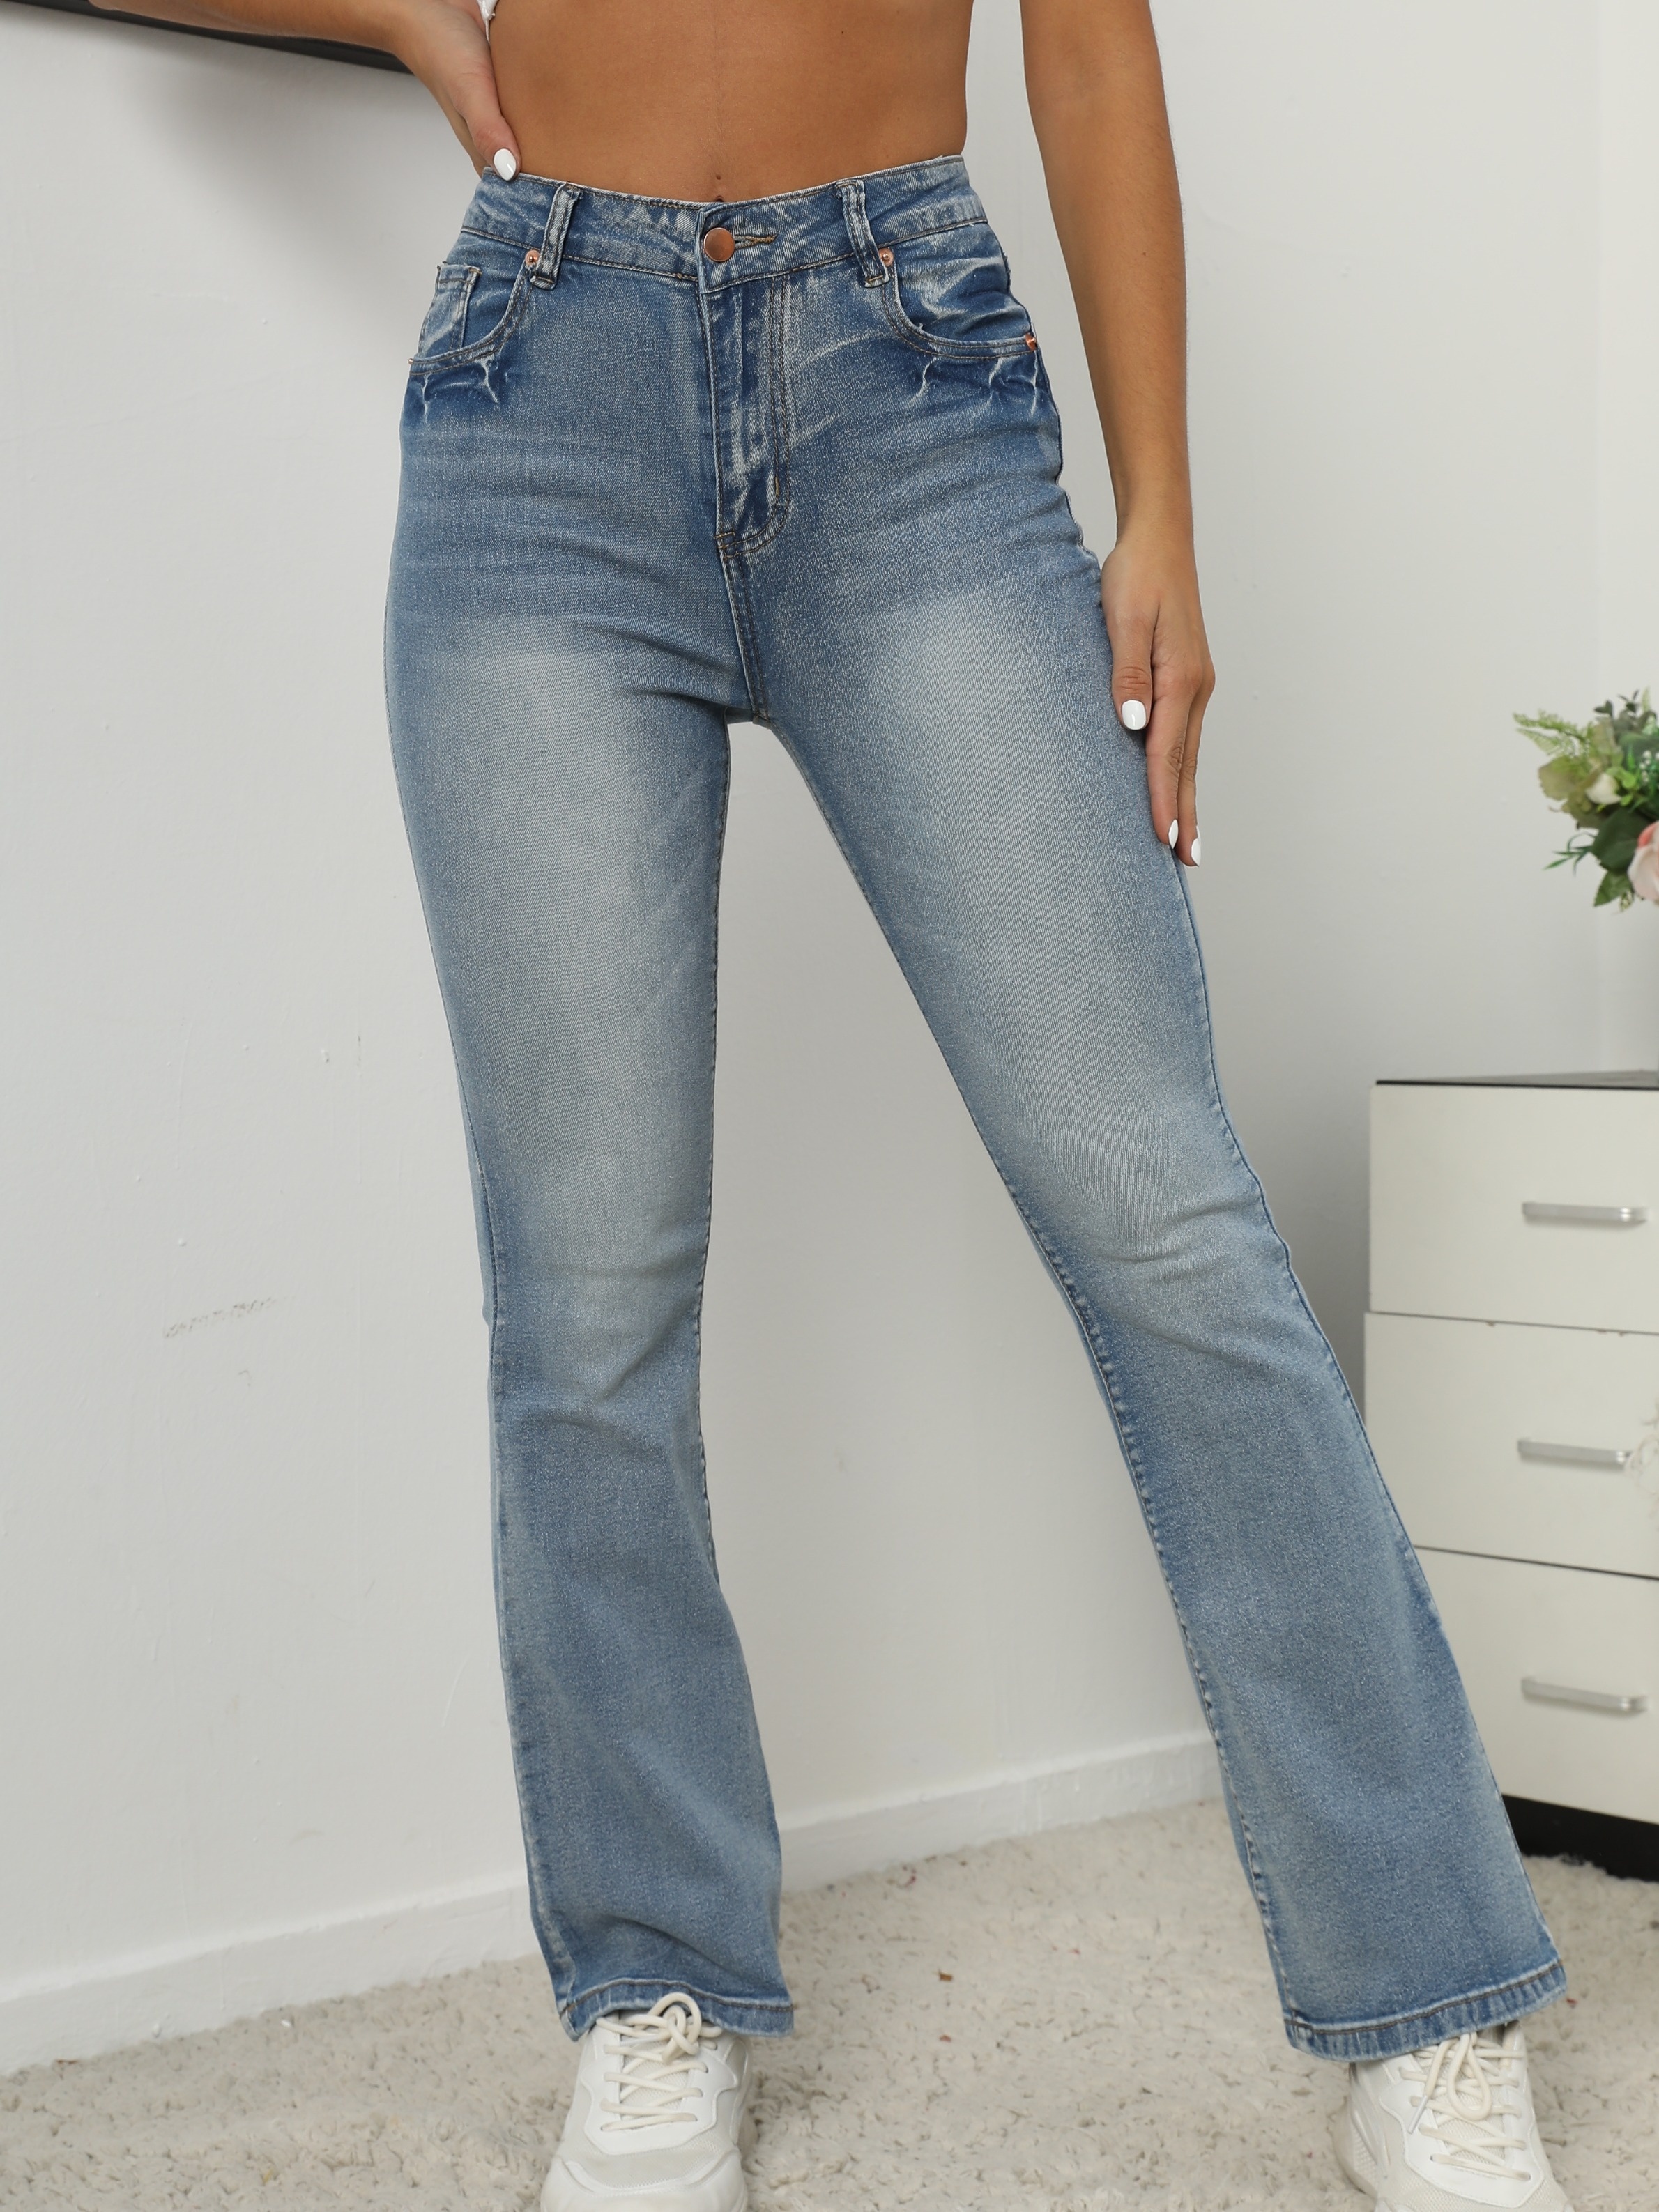 plain whiskered straight leg jeans high waist slant pockets casual bootcut jeans womens denim jeans clothing